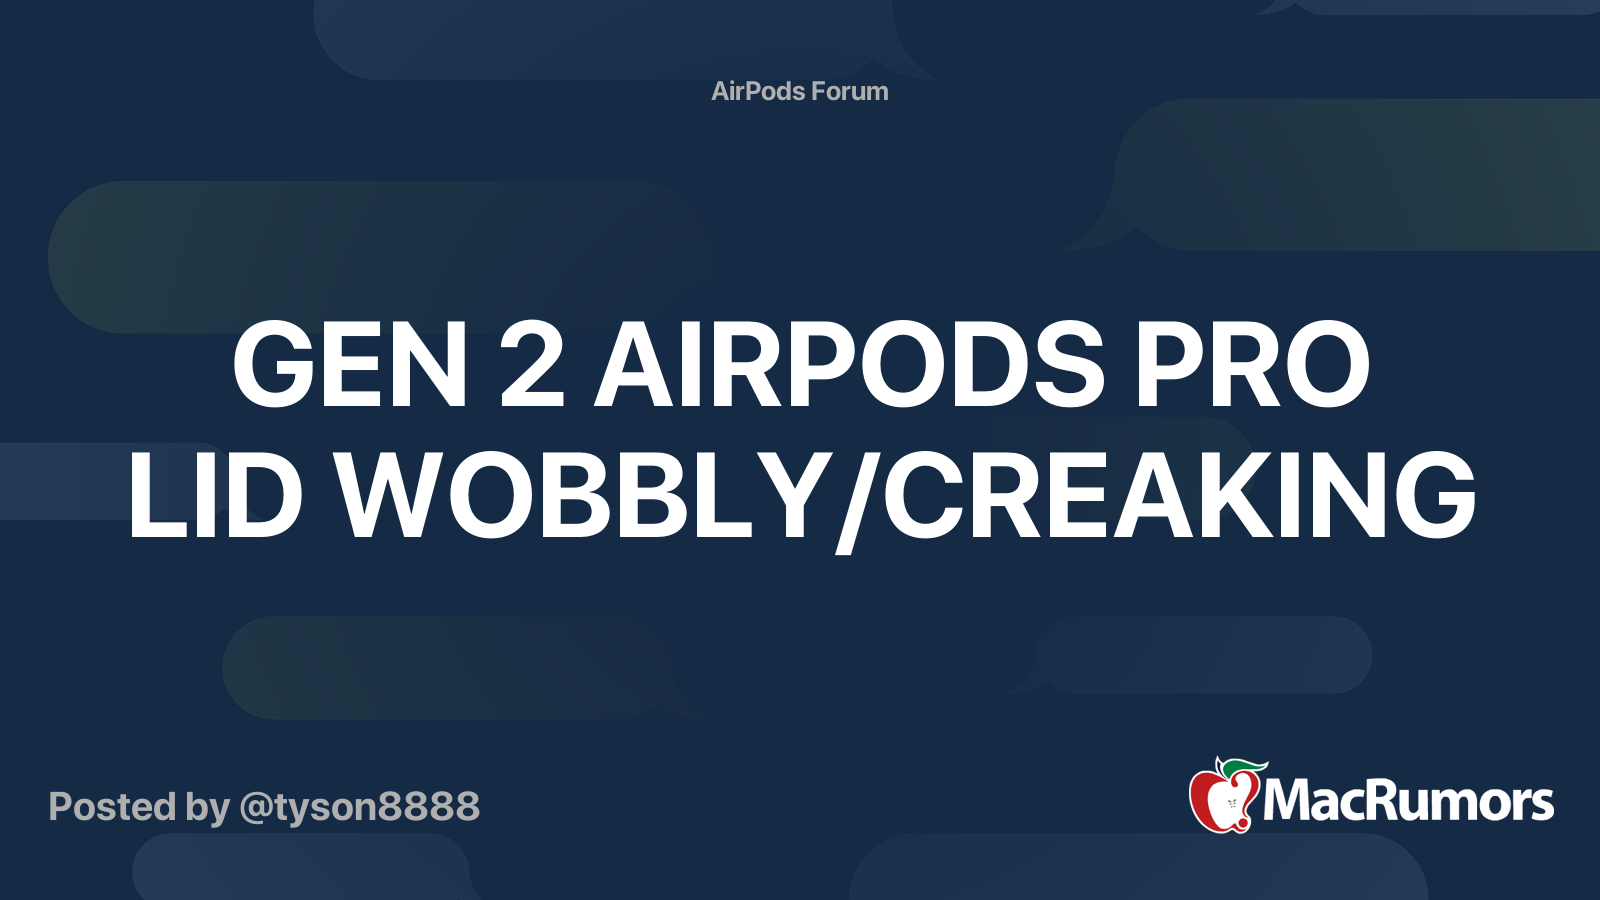 GEN 2 AIRPODS PRO LID WOBBLY/CREAKING Forums